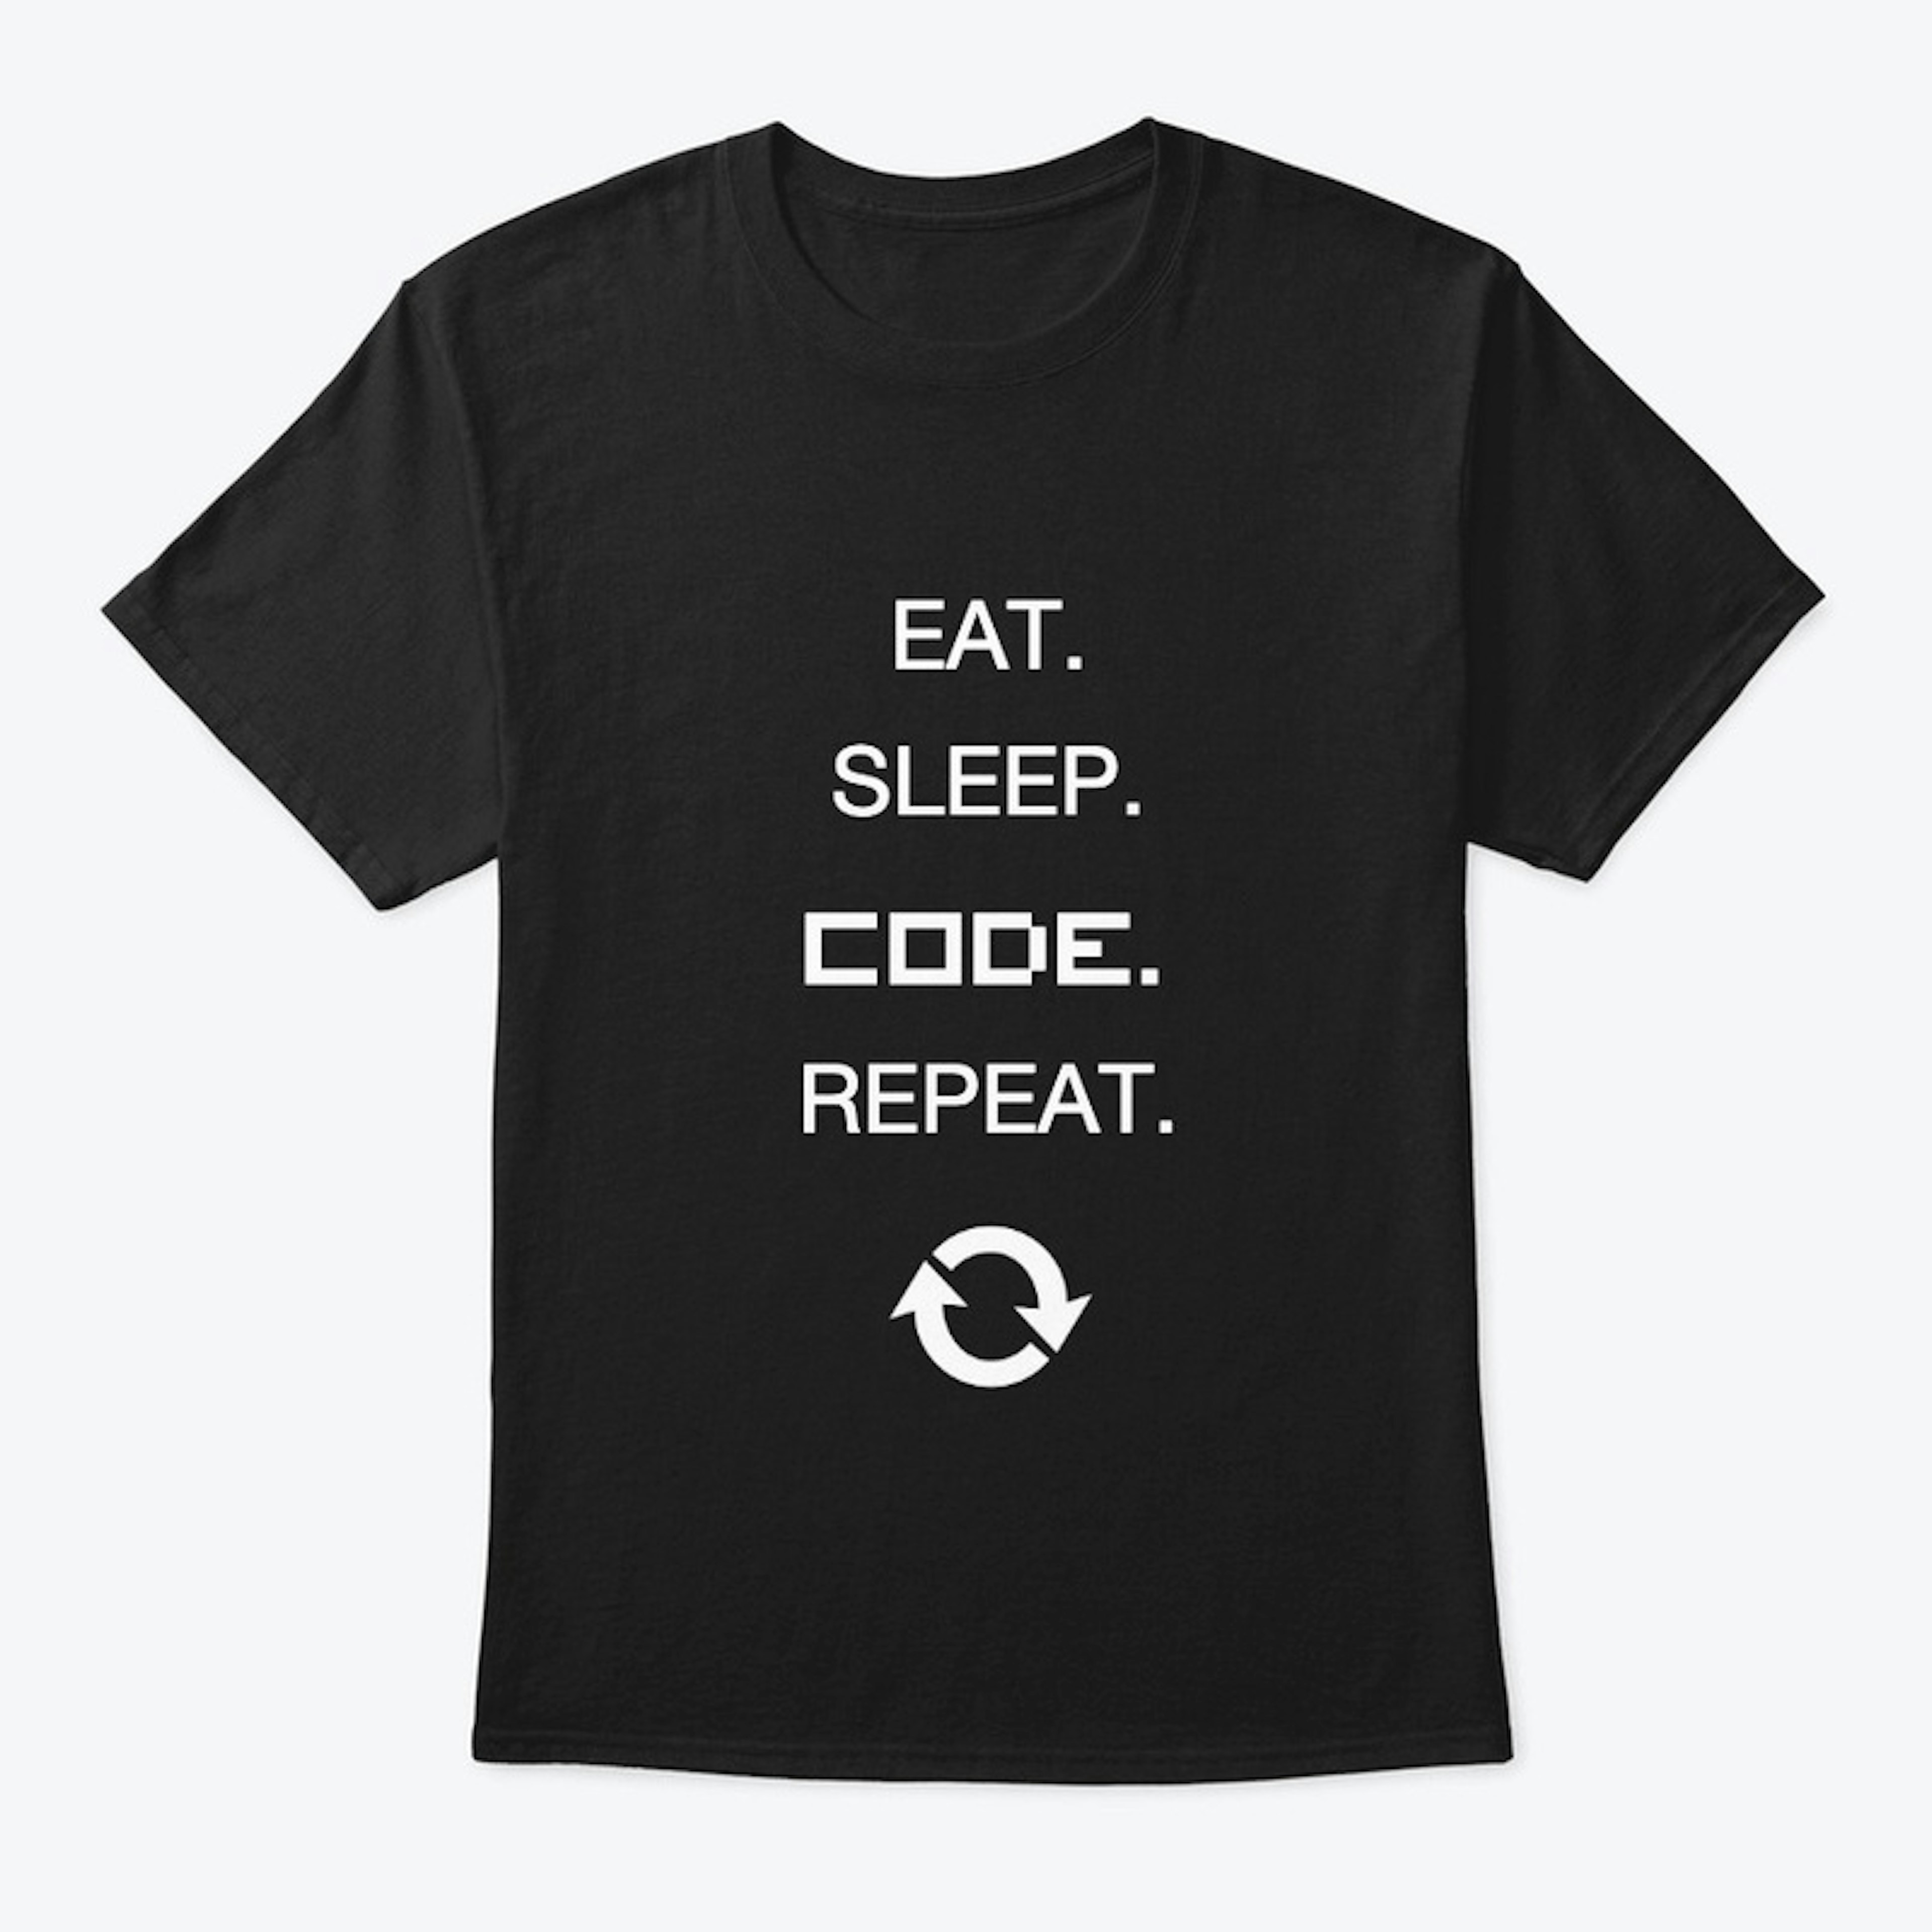 Eat sleep code repeat tshirt